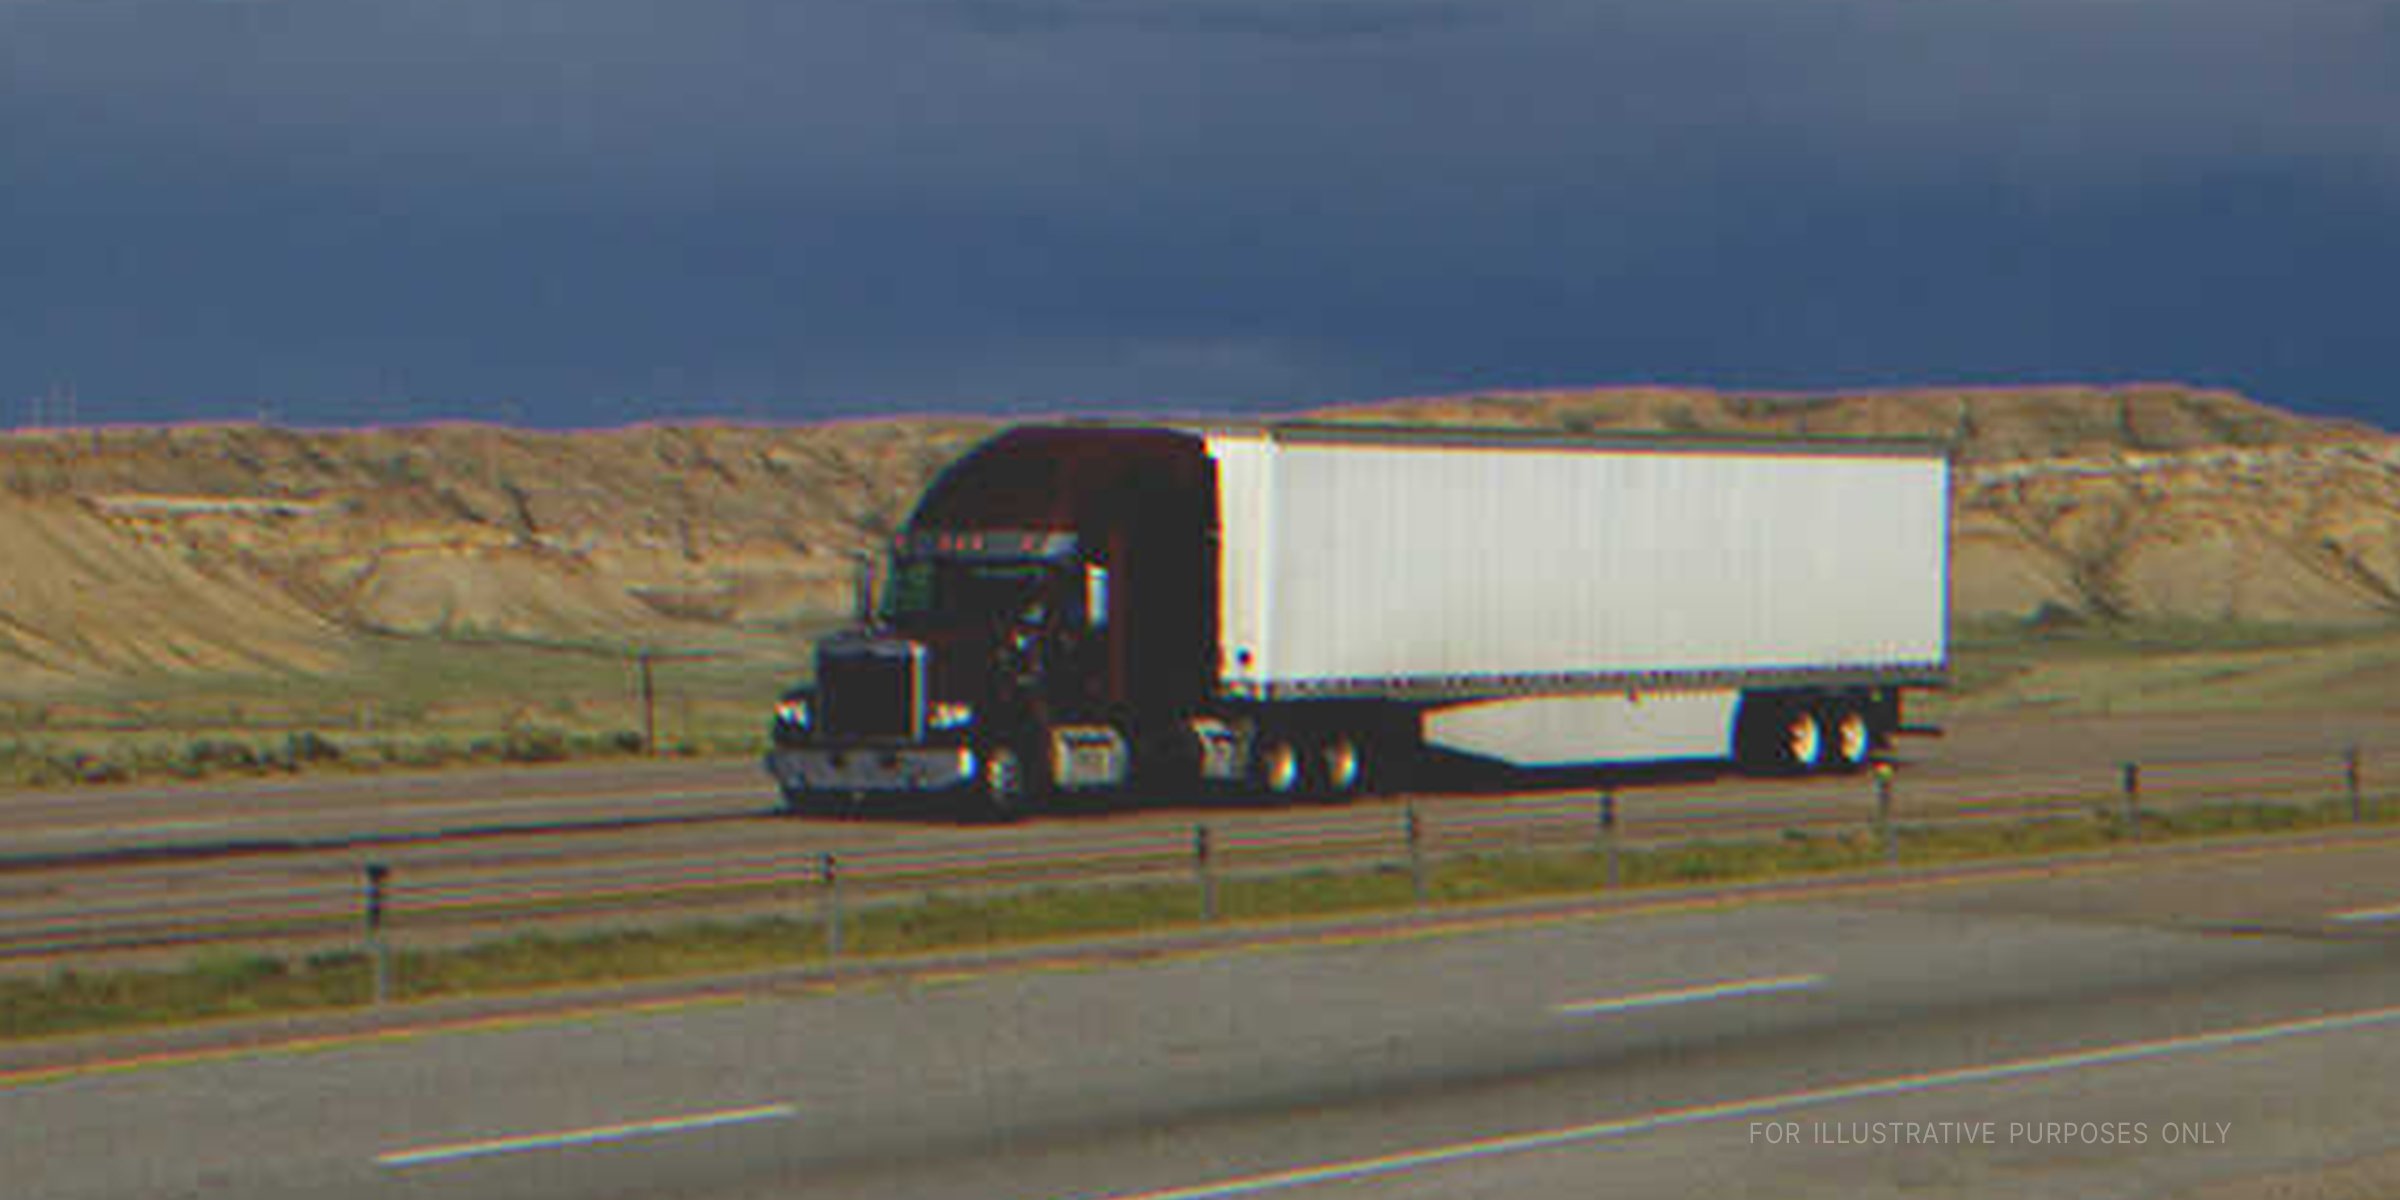 Truck on a highway. | Source: Shutterstock